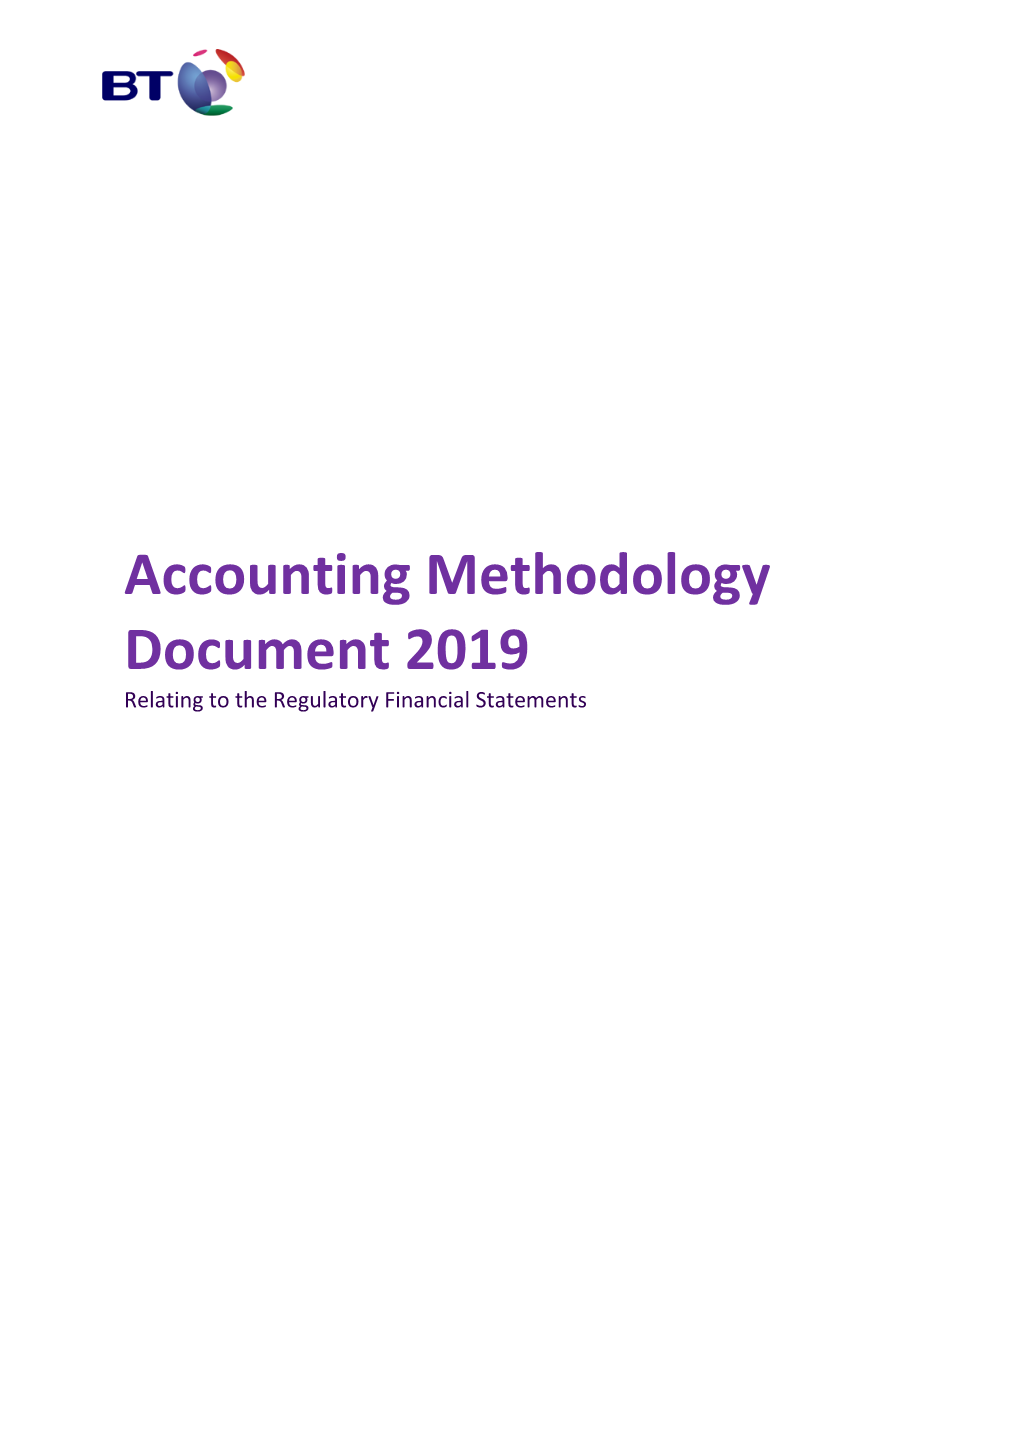 Accounting Methodology Document 2018-19